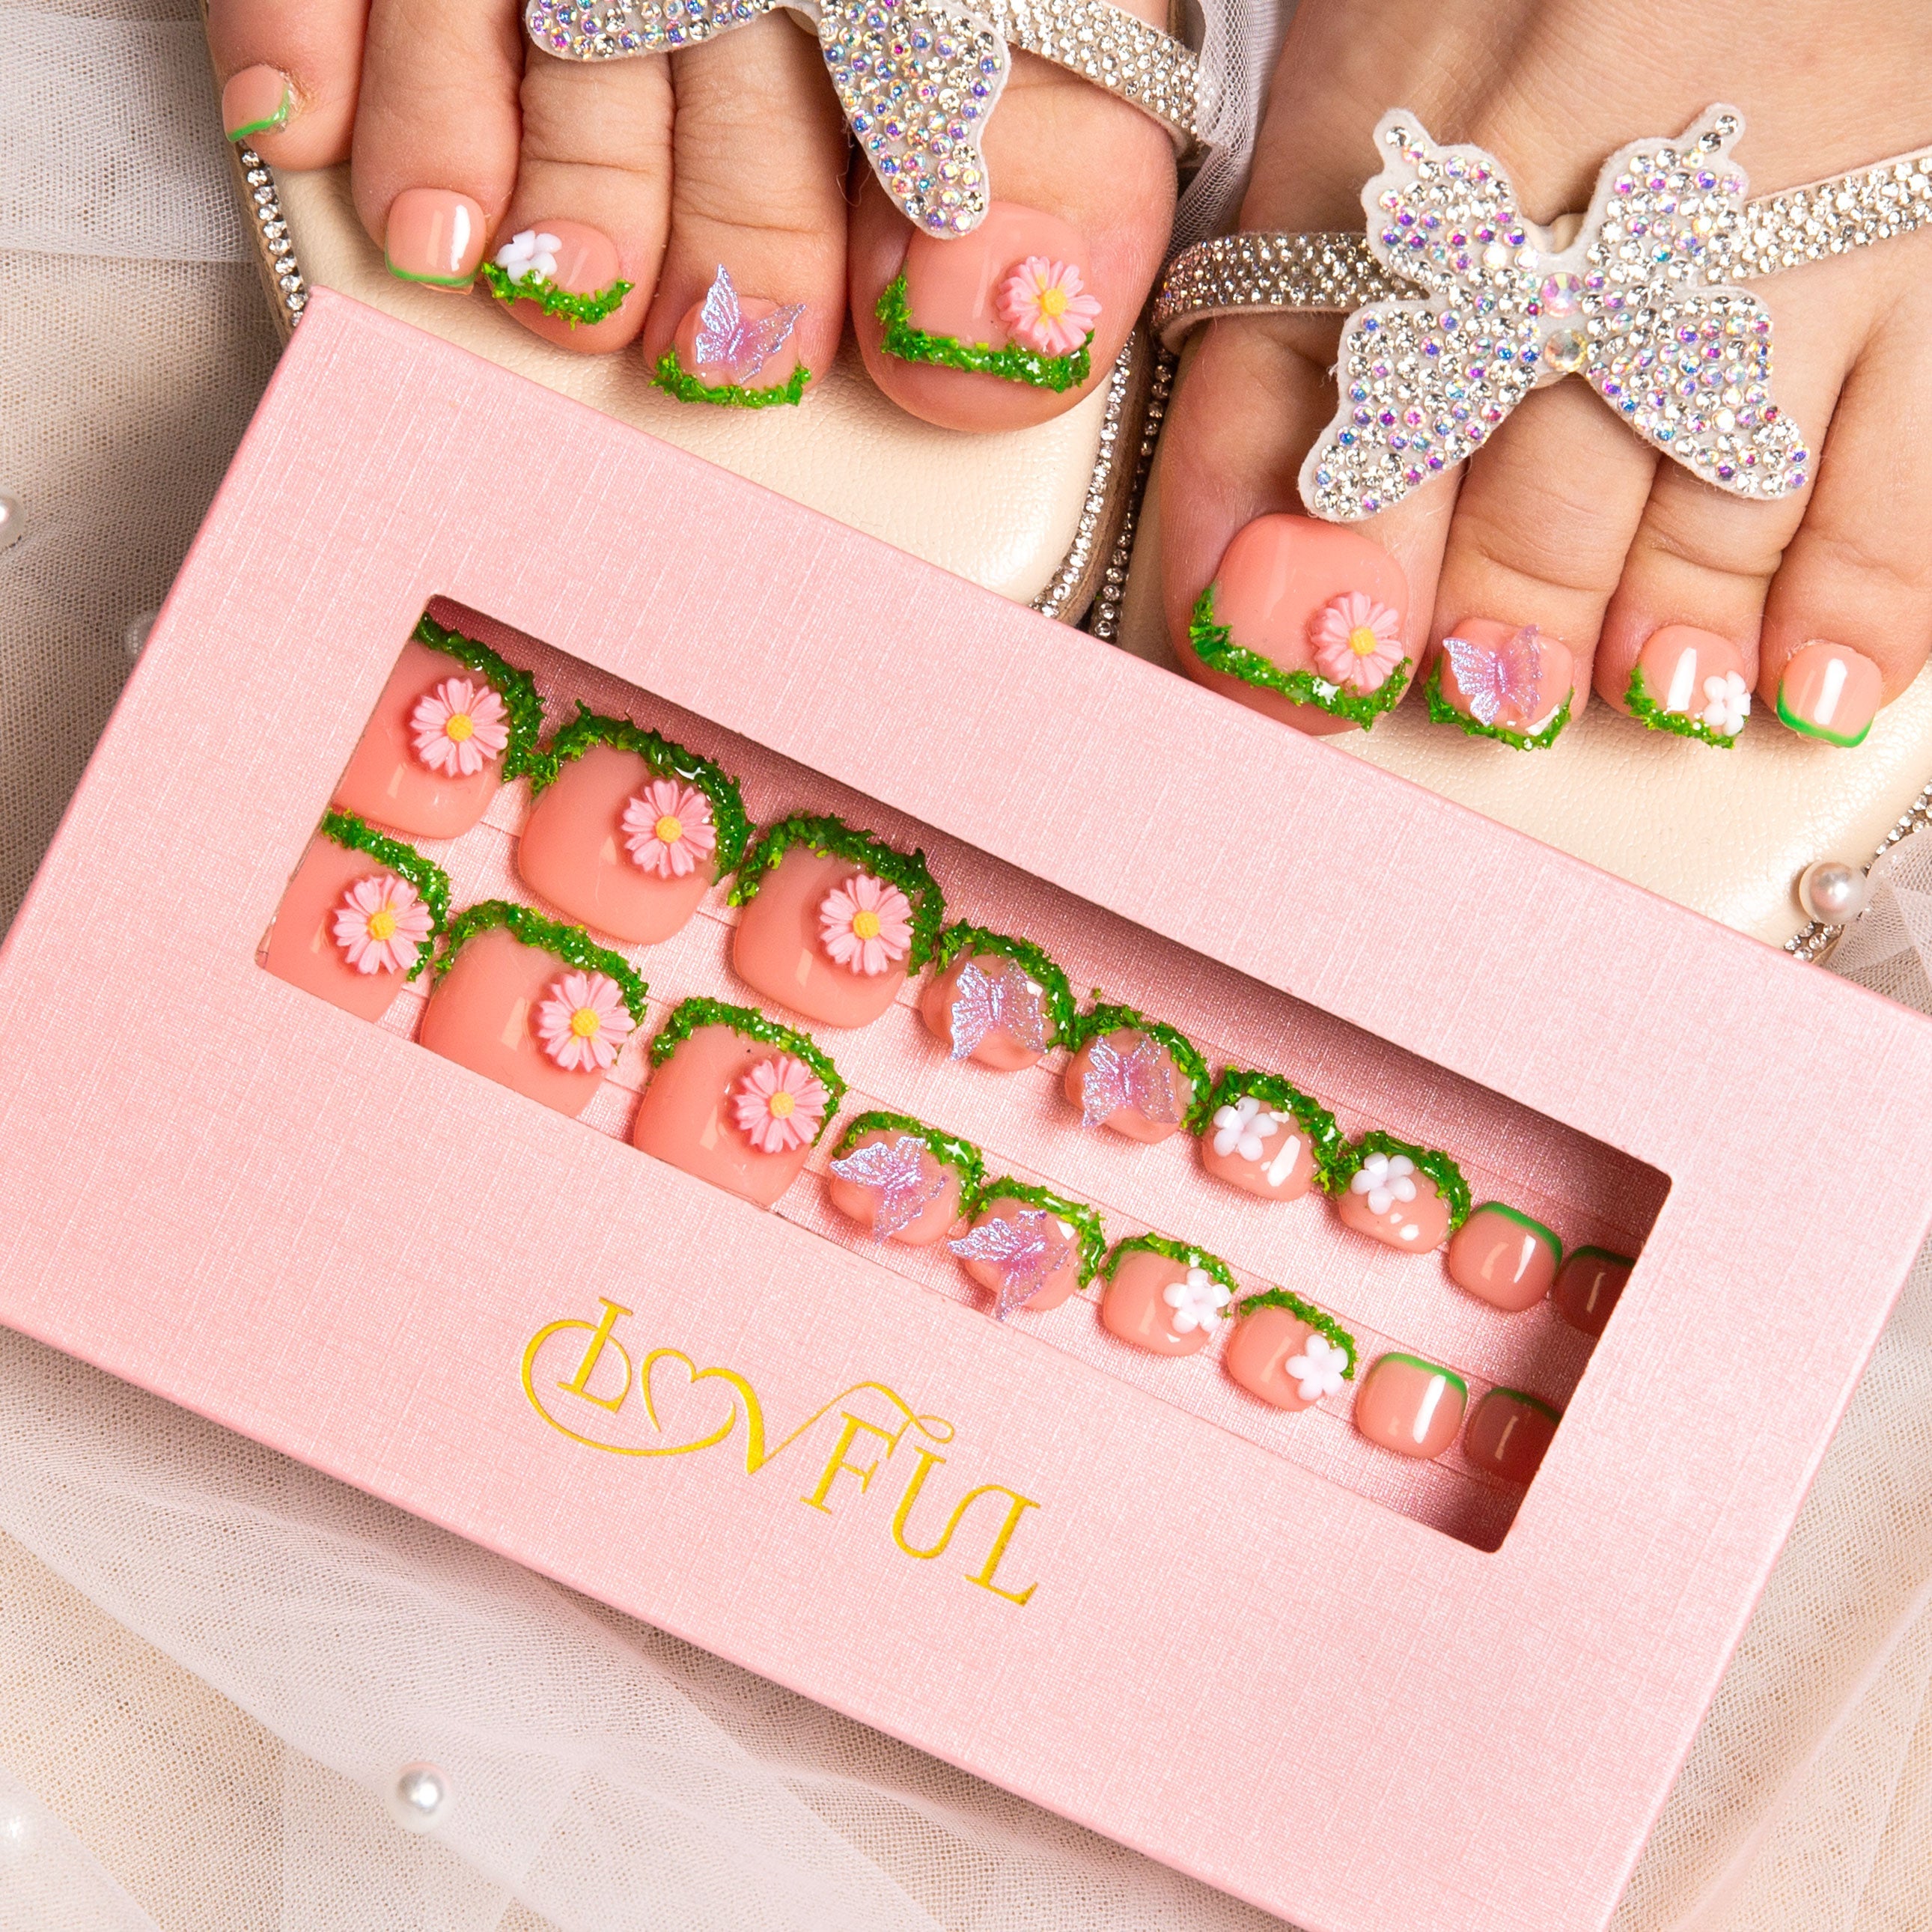 fairy tale garden toe nails